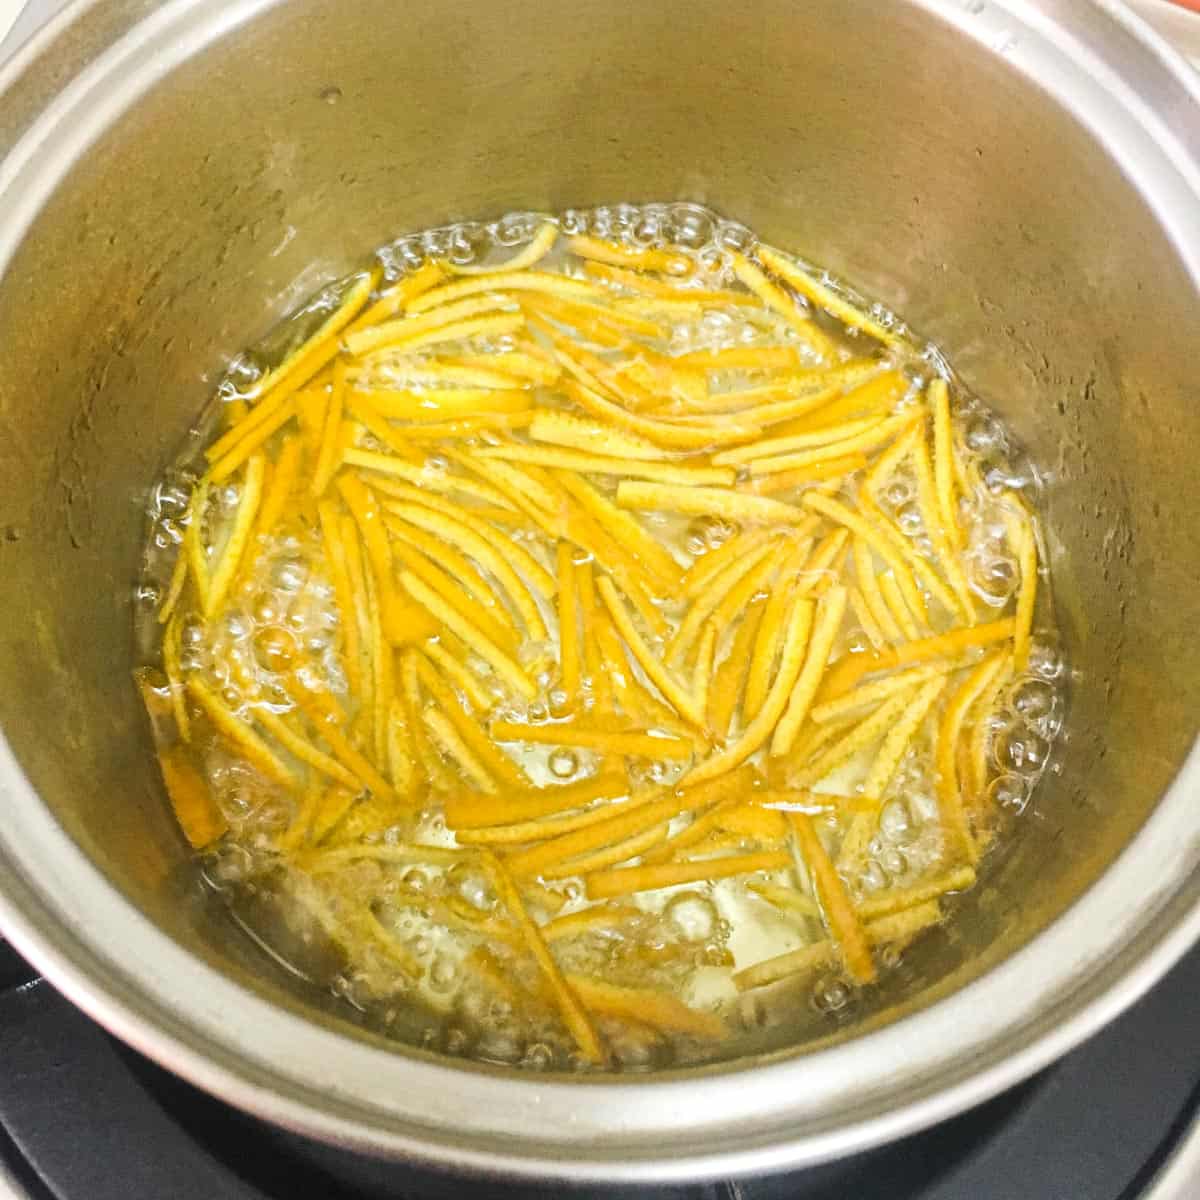 Orange peel strips simmering in a small pot.